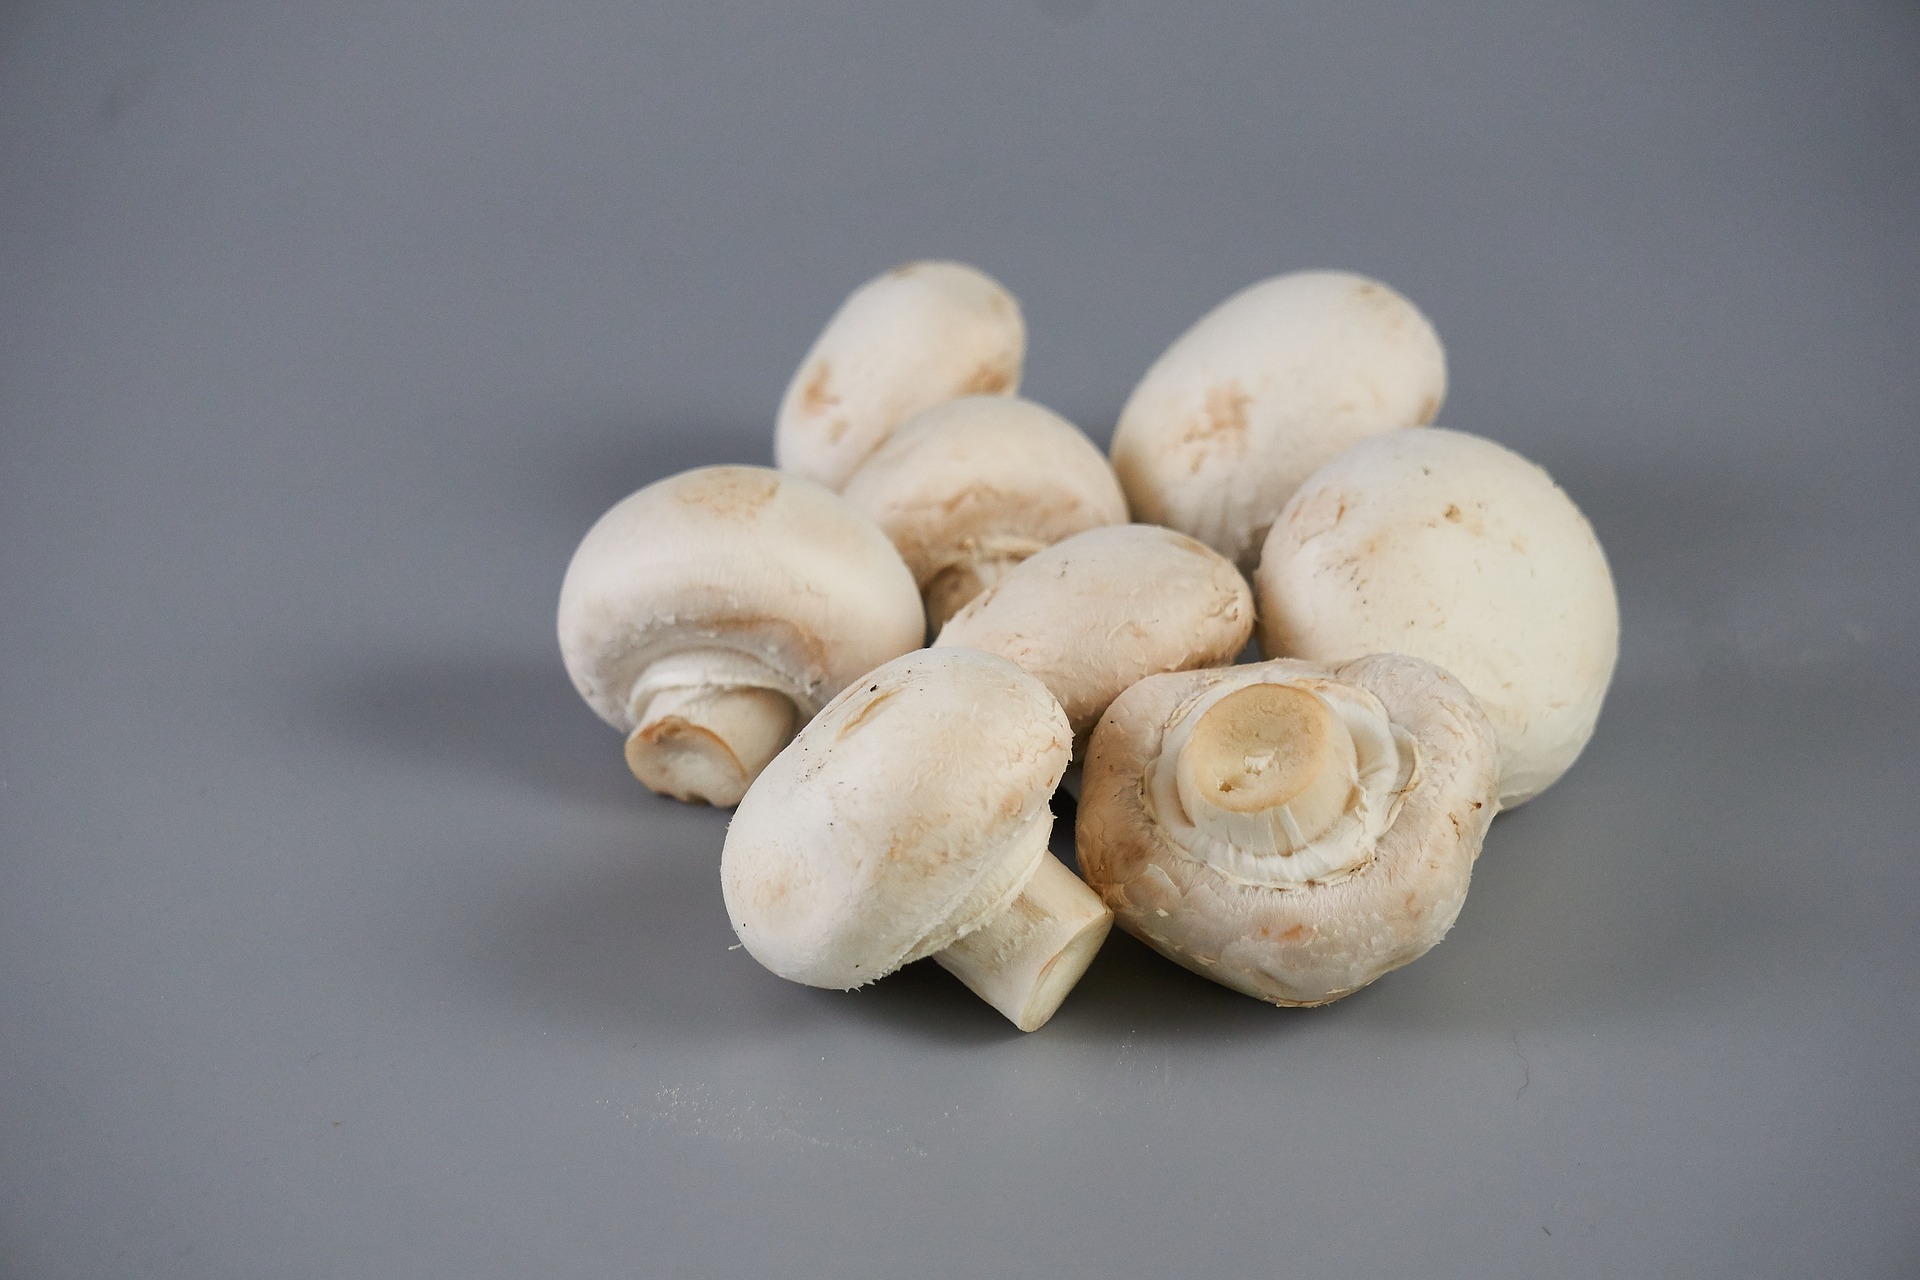 Benefícios dos cogumelos: 4 vantagens de consumir esse alimento